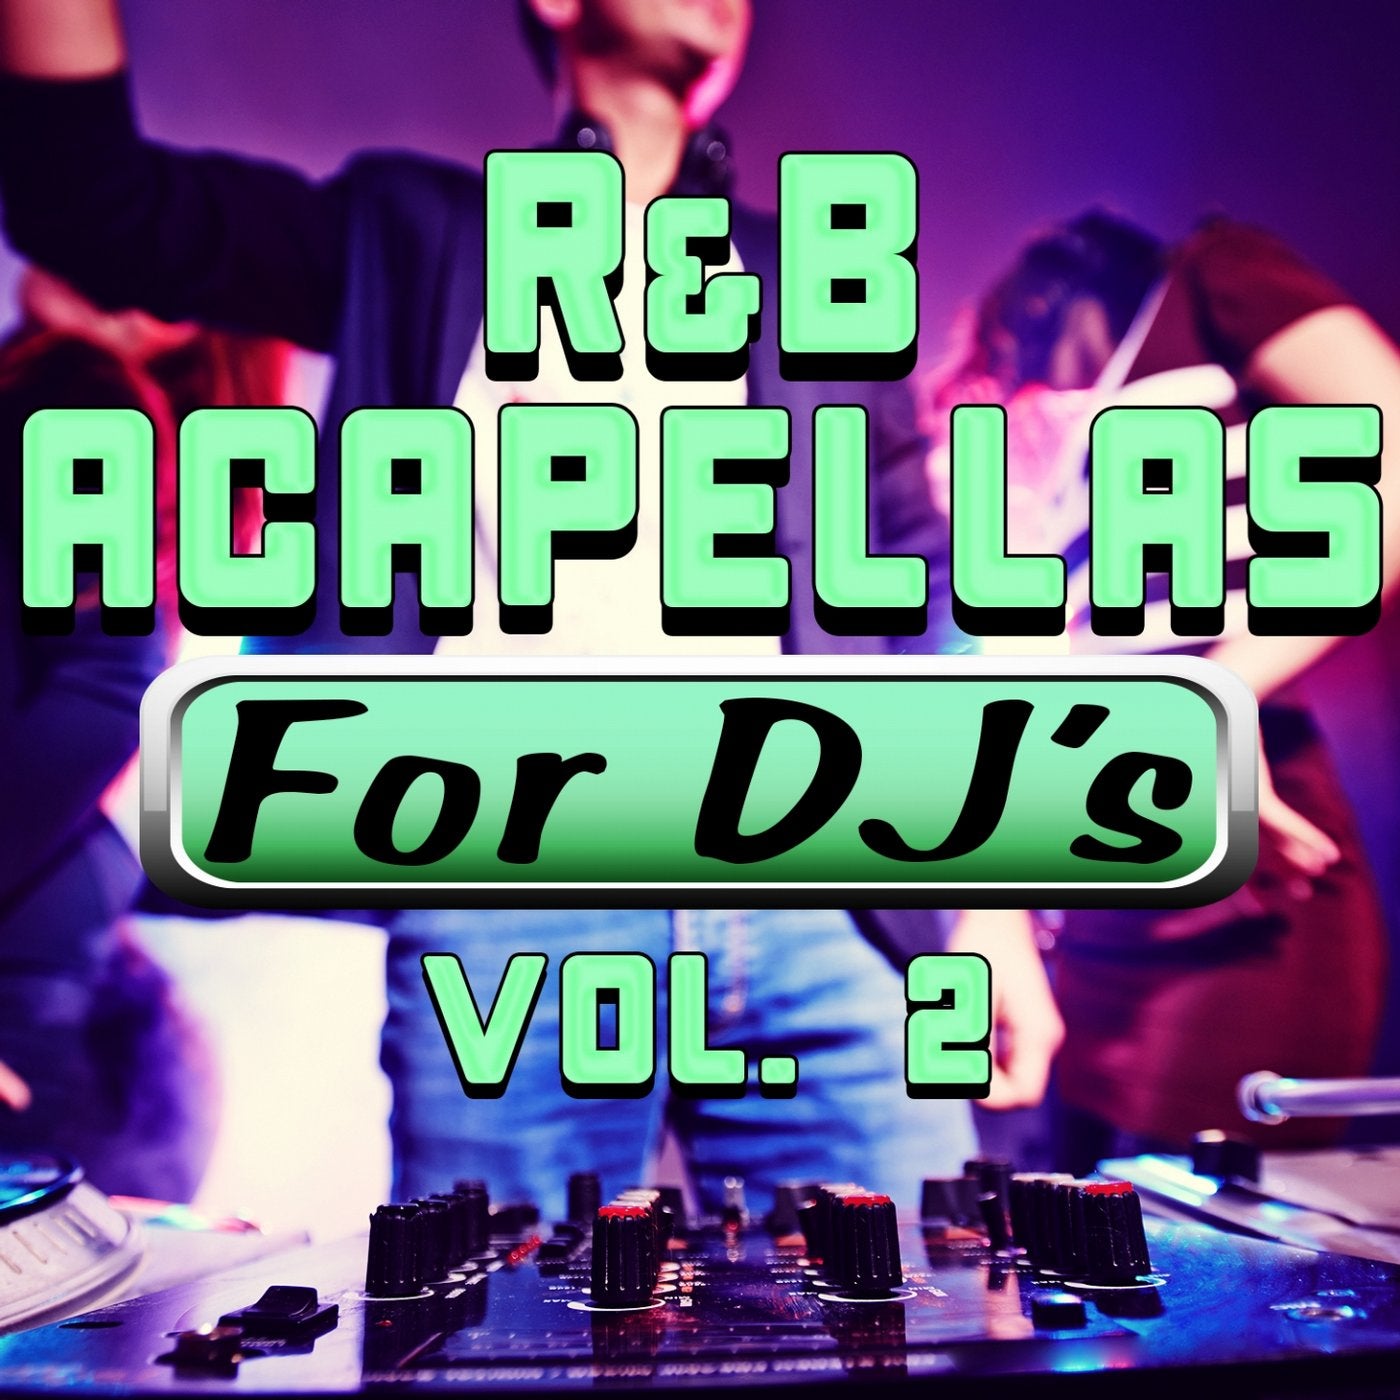 R&B Acapellas for DJ's, Vol. 2